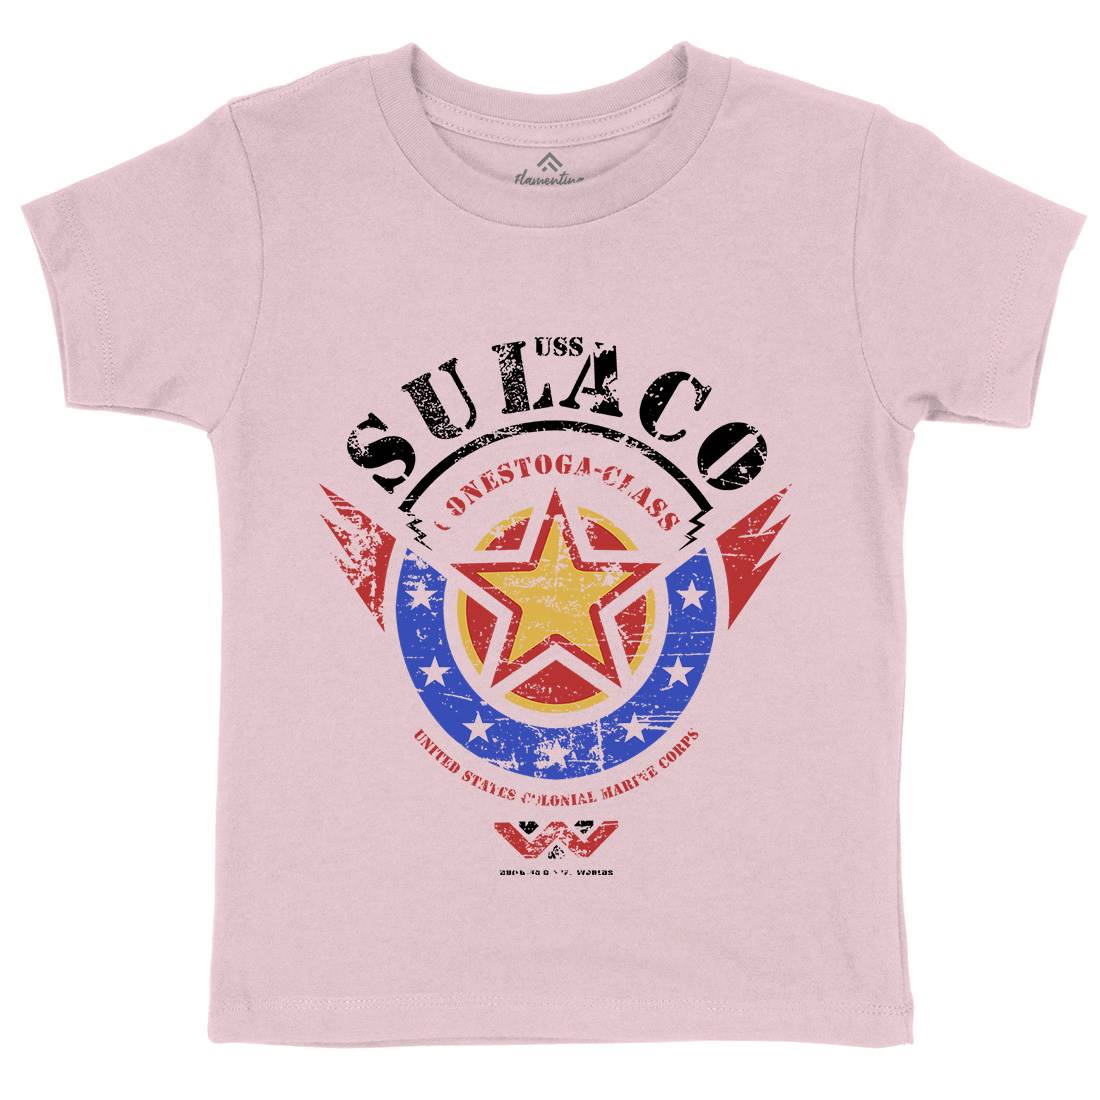 Uss Sulaco Kids Crew Neck T-Shirt Space D275